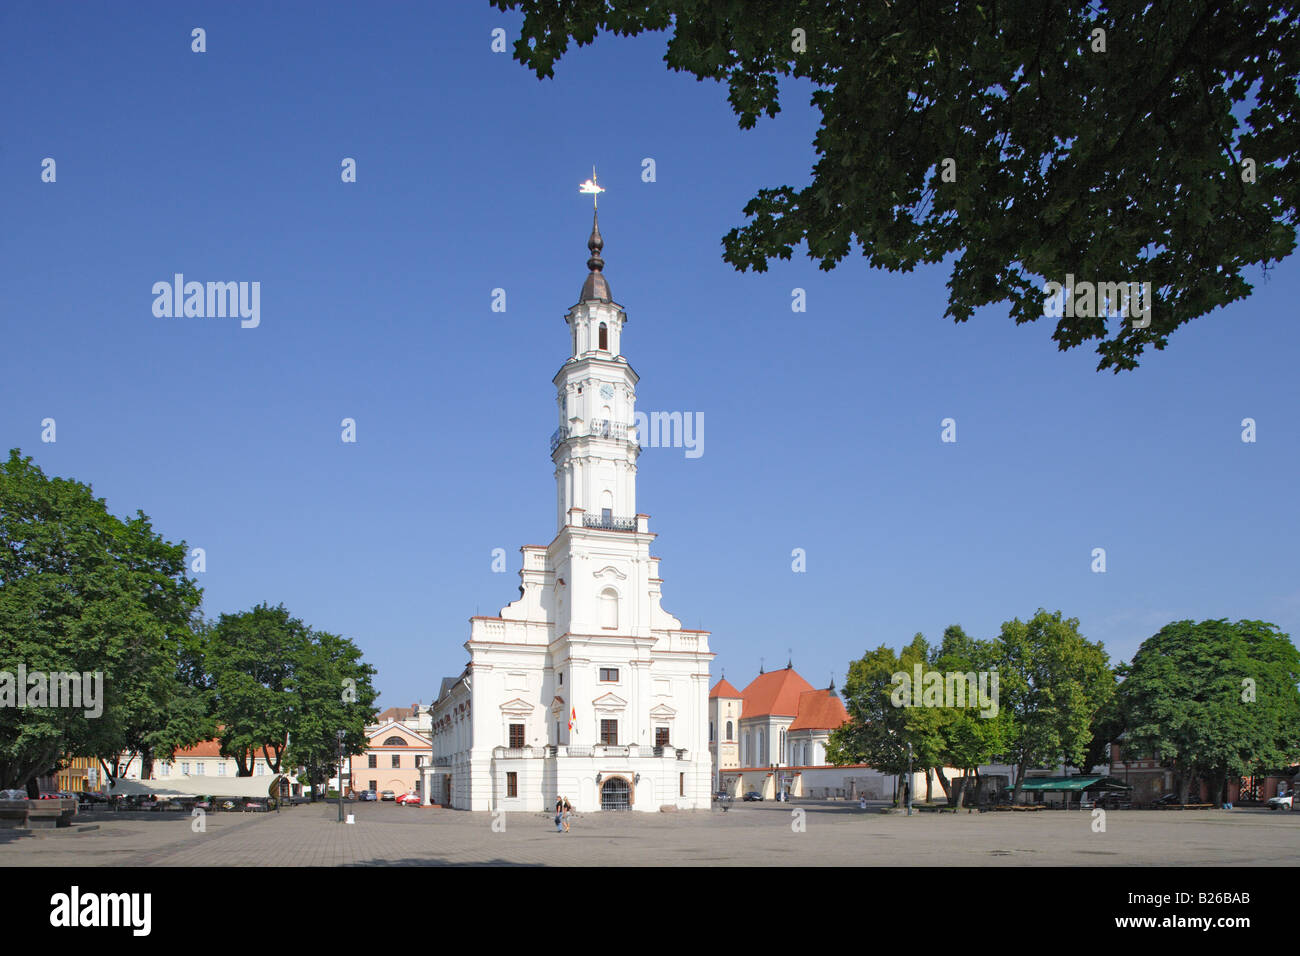 Kaunas town hall (also called the white swan), Lithuania Stock Photo